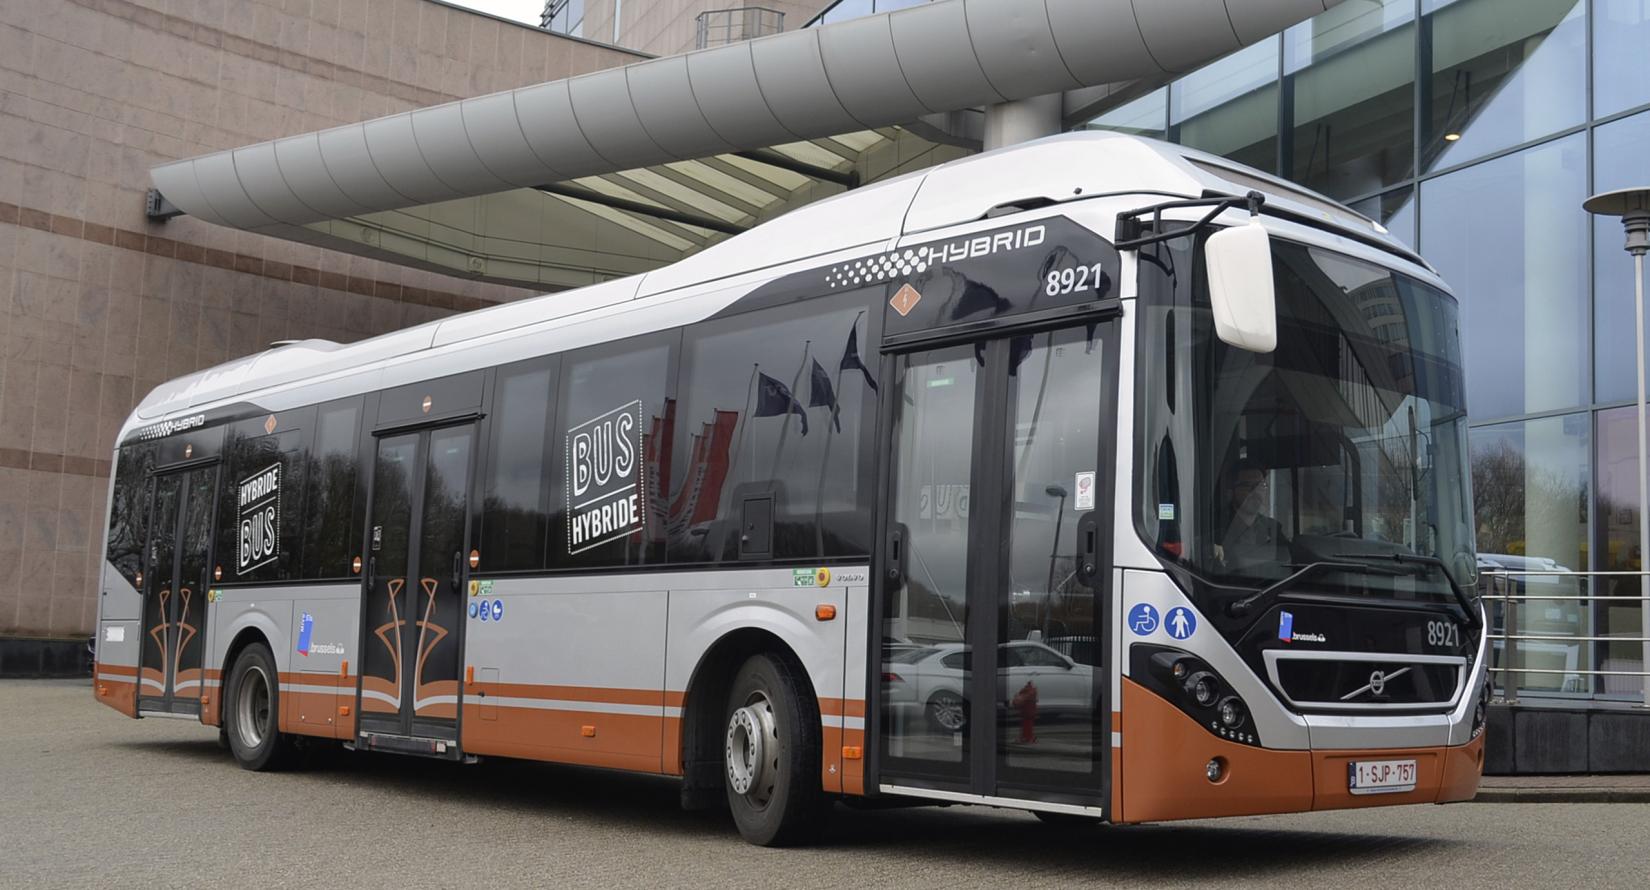 202005-volvo-bus-hybride.jpg